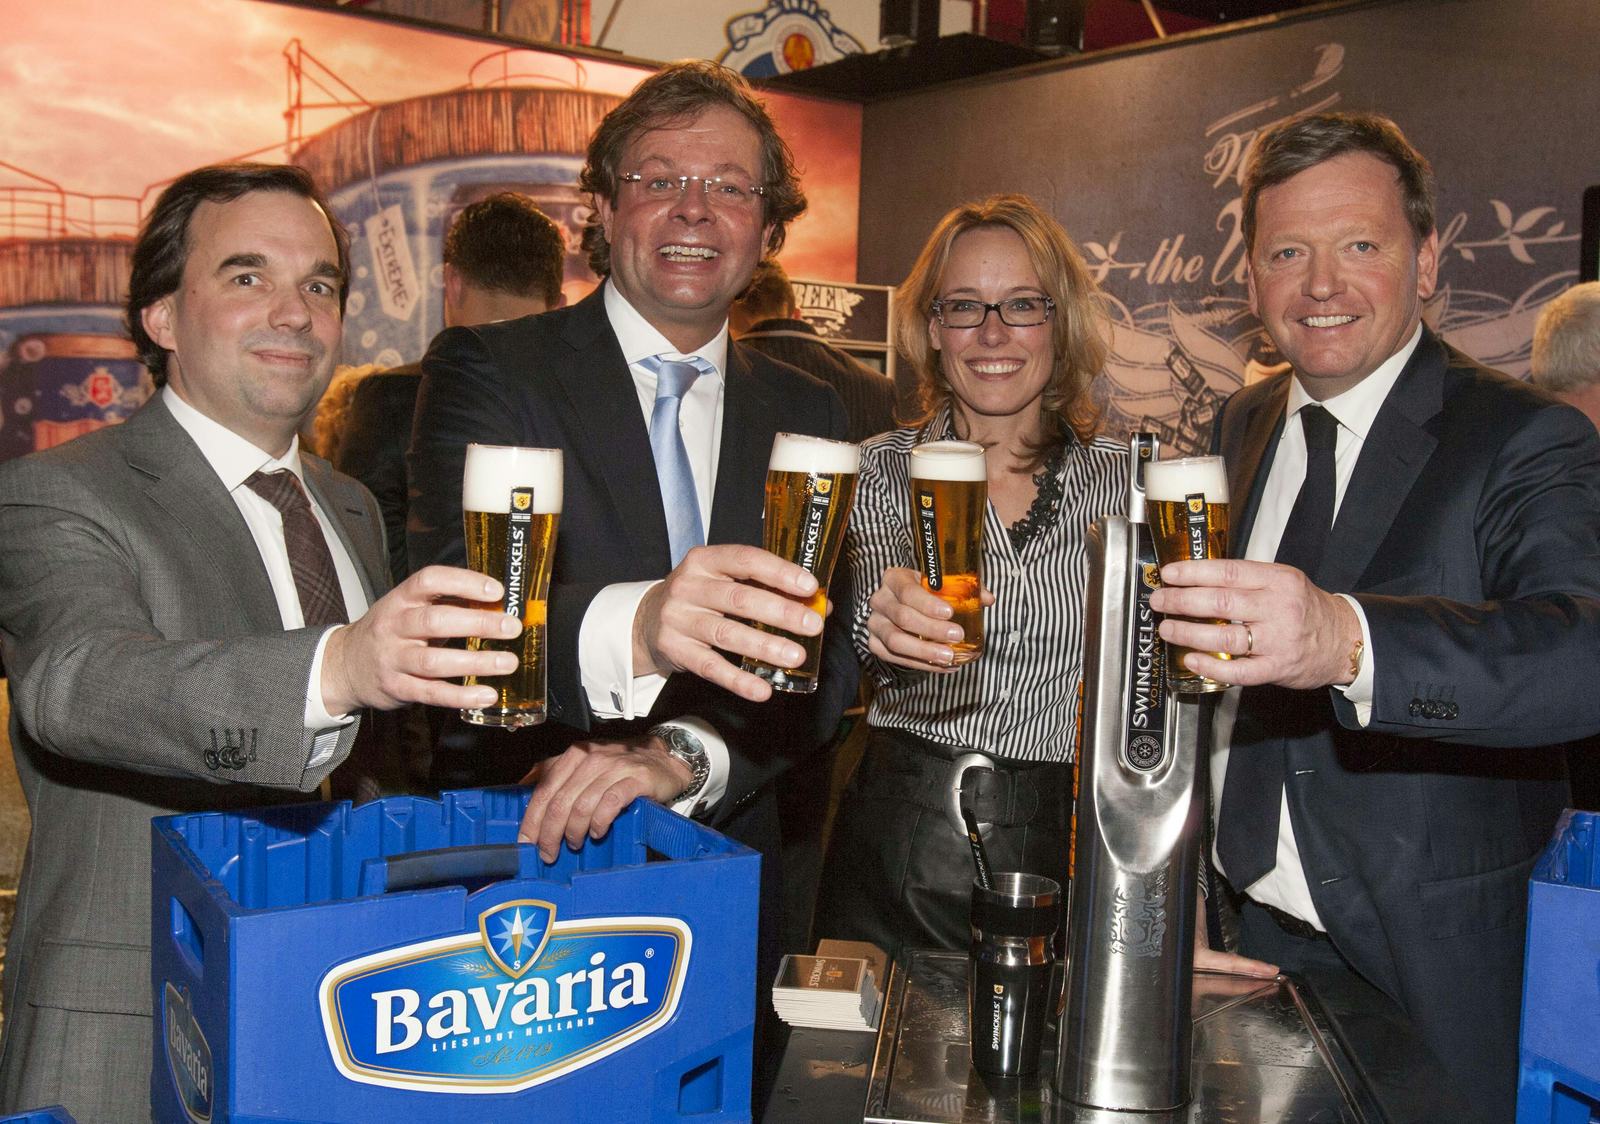 Bavaria bierleverancier alle Fletcher Hotels